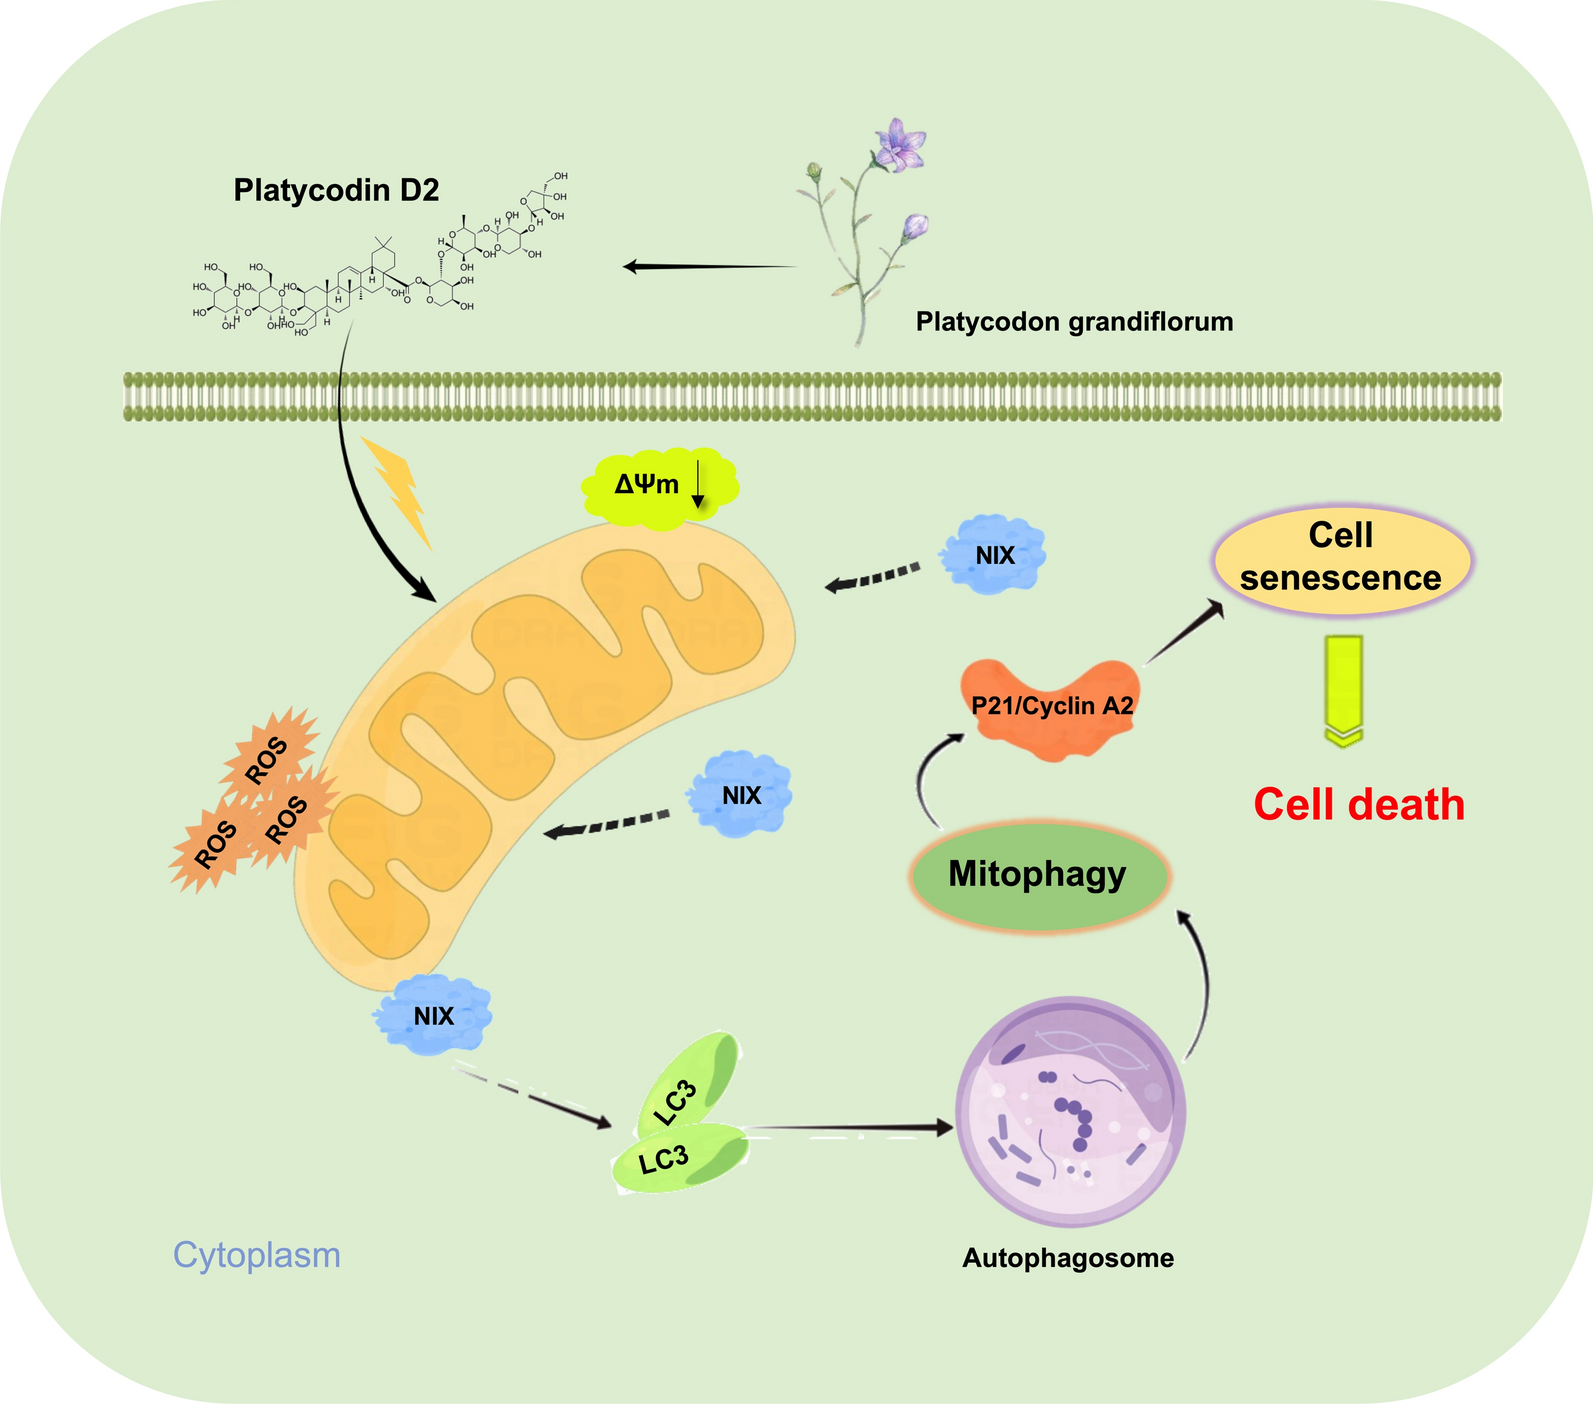 Platycodin D2 enhances P21/CyclinA2-mediated senescence of HCC cells by regulating NIX-induced mitophagy